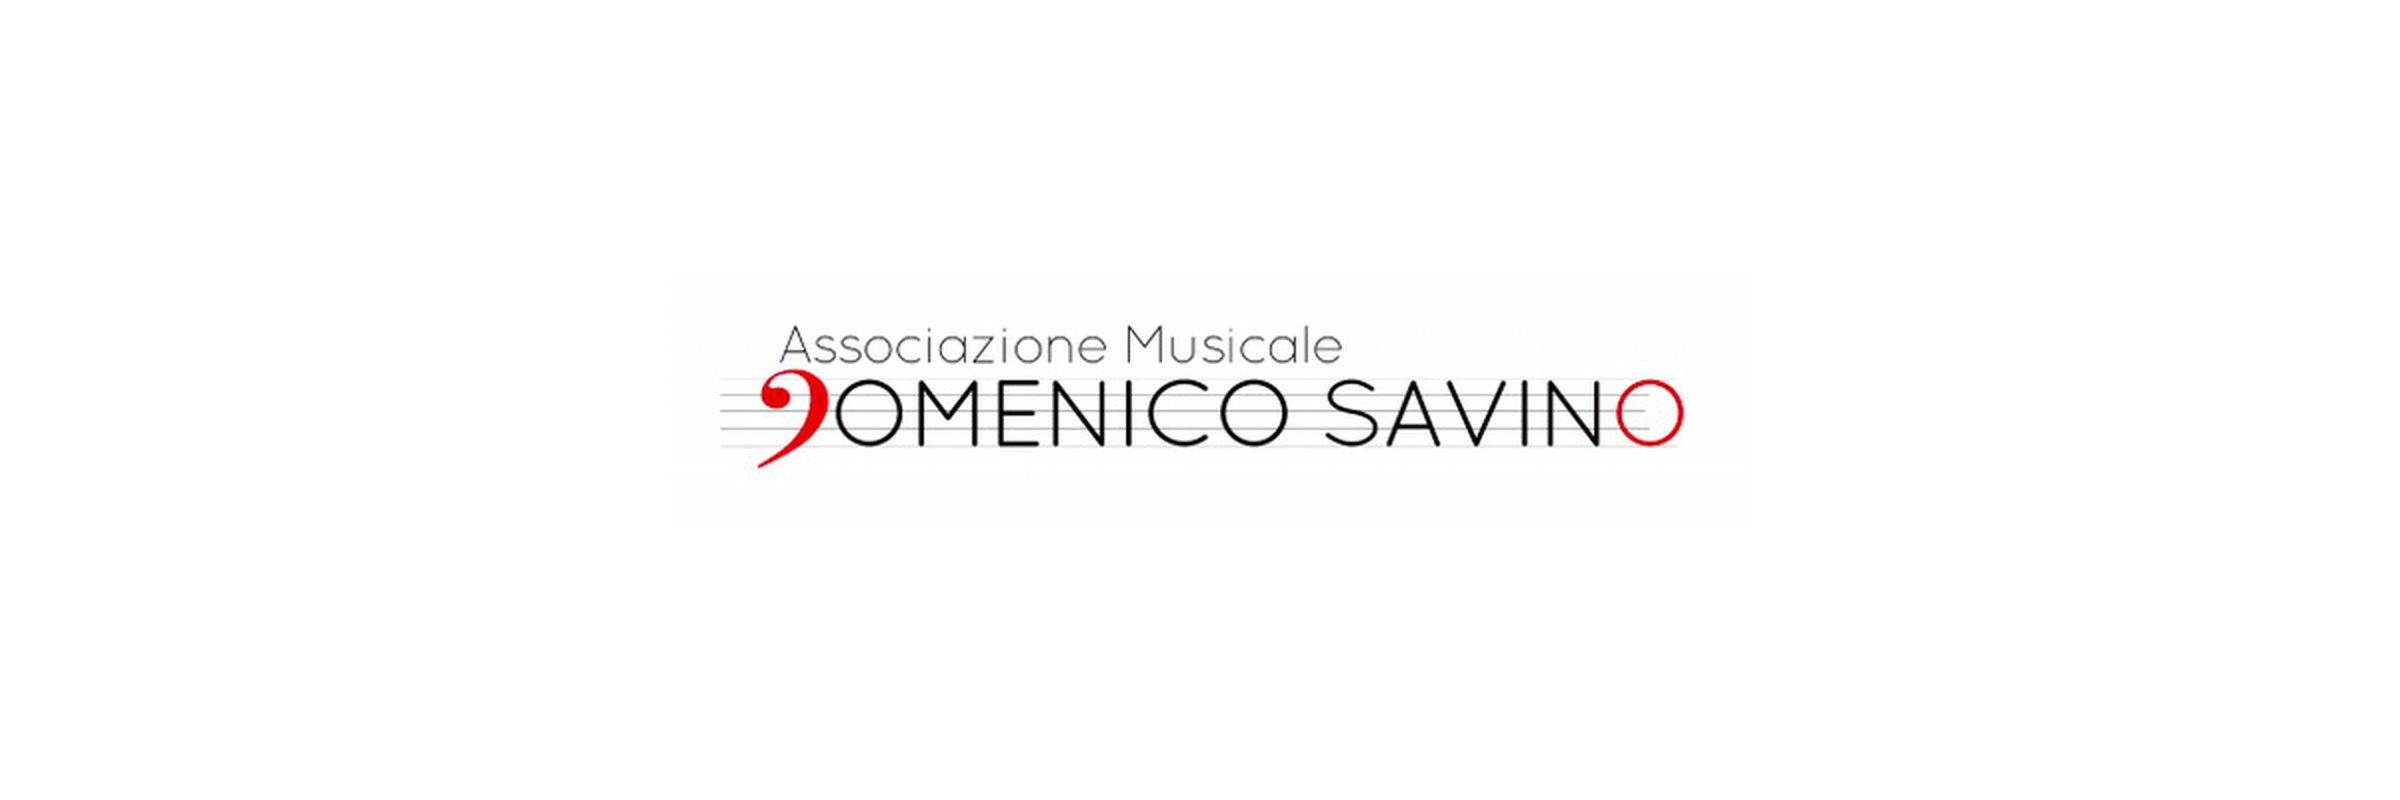 Musical Association Domenico Savino -  Symbola Percussion ensemble